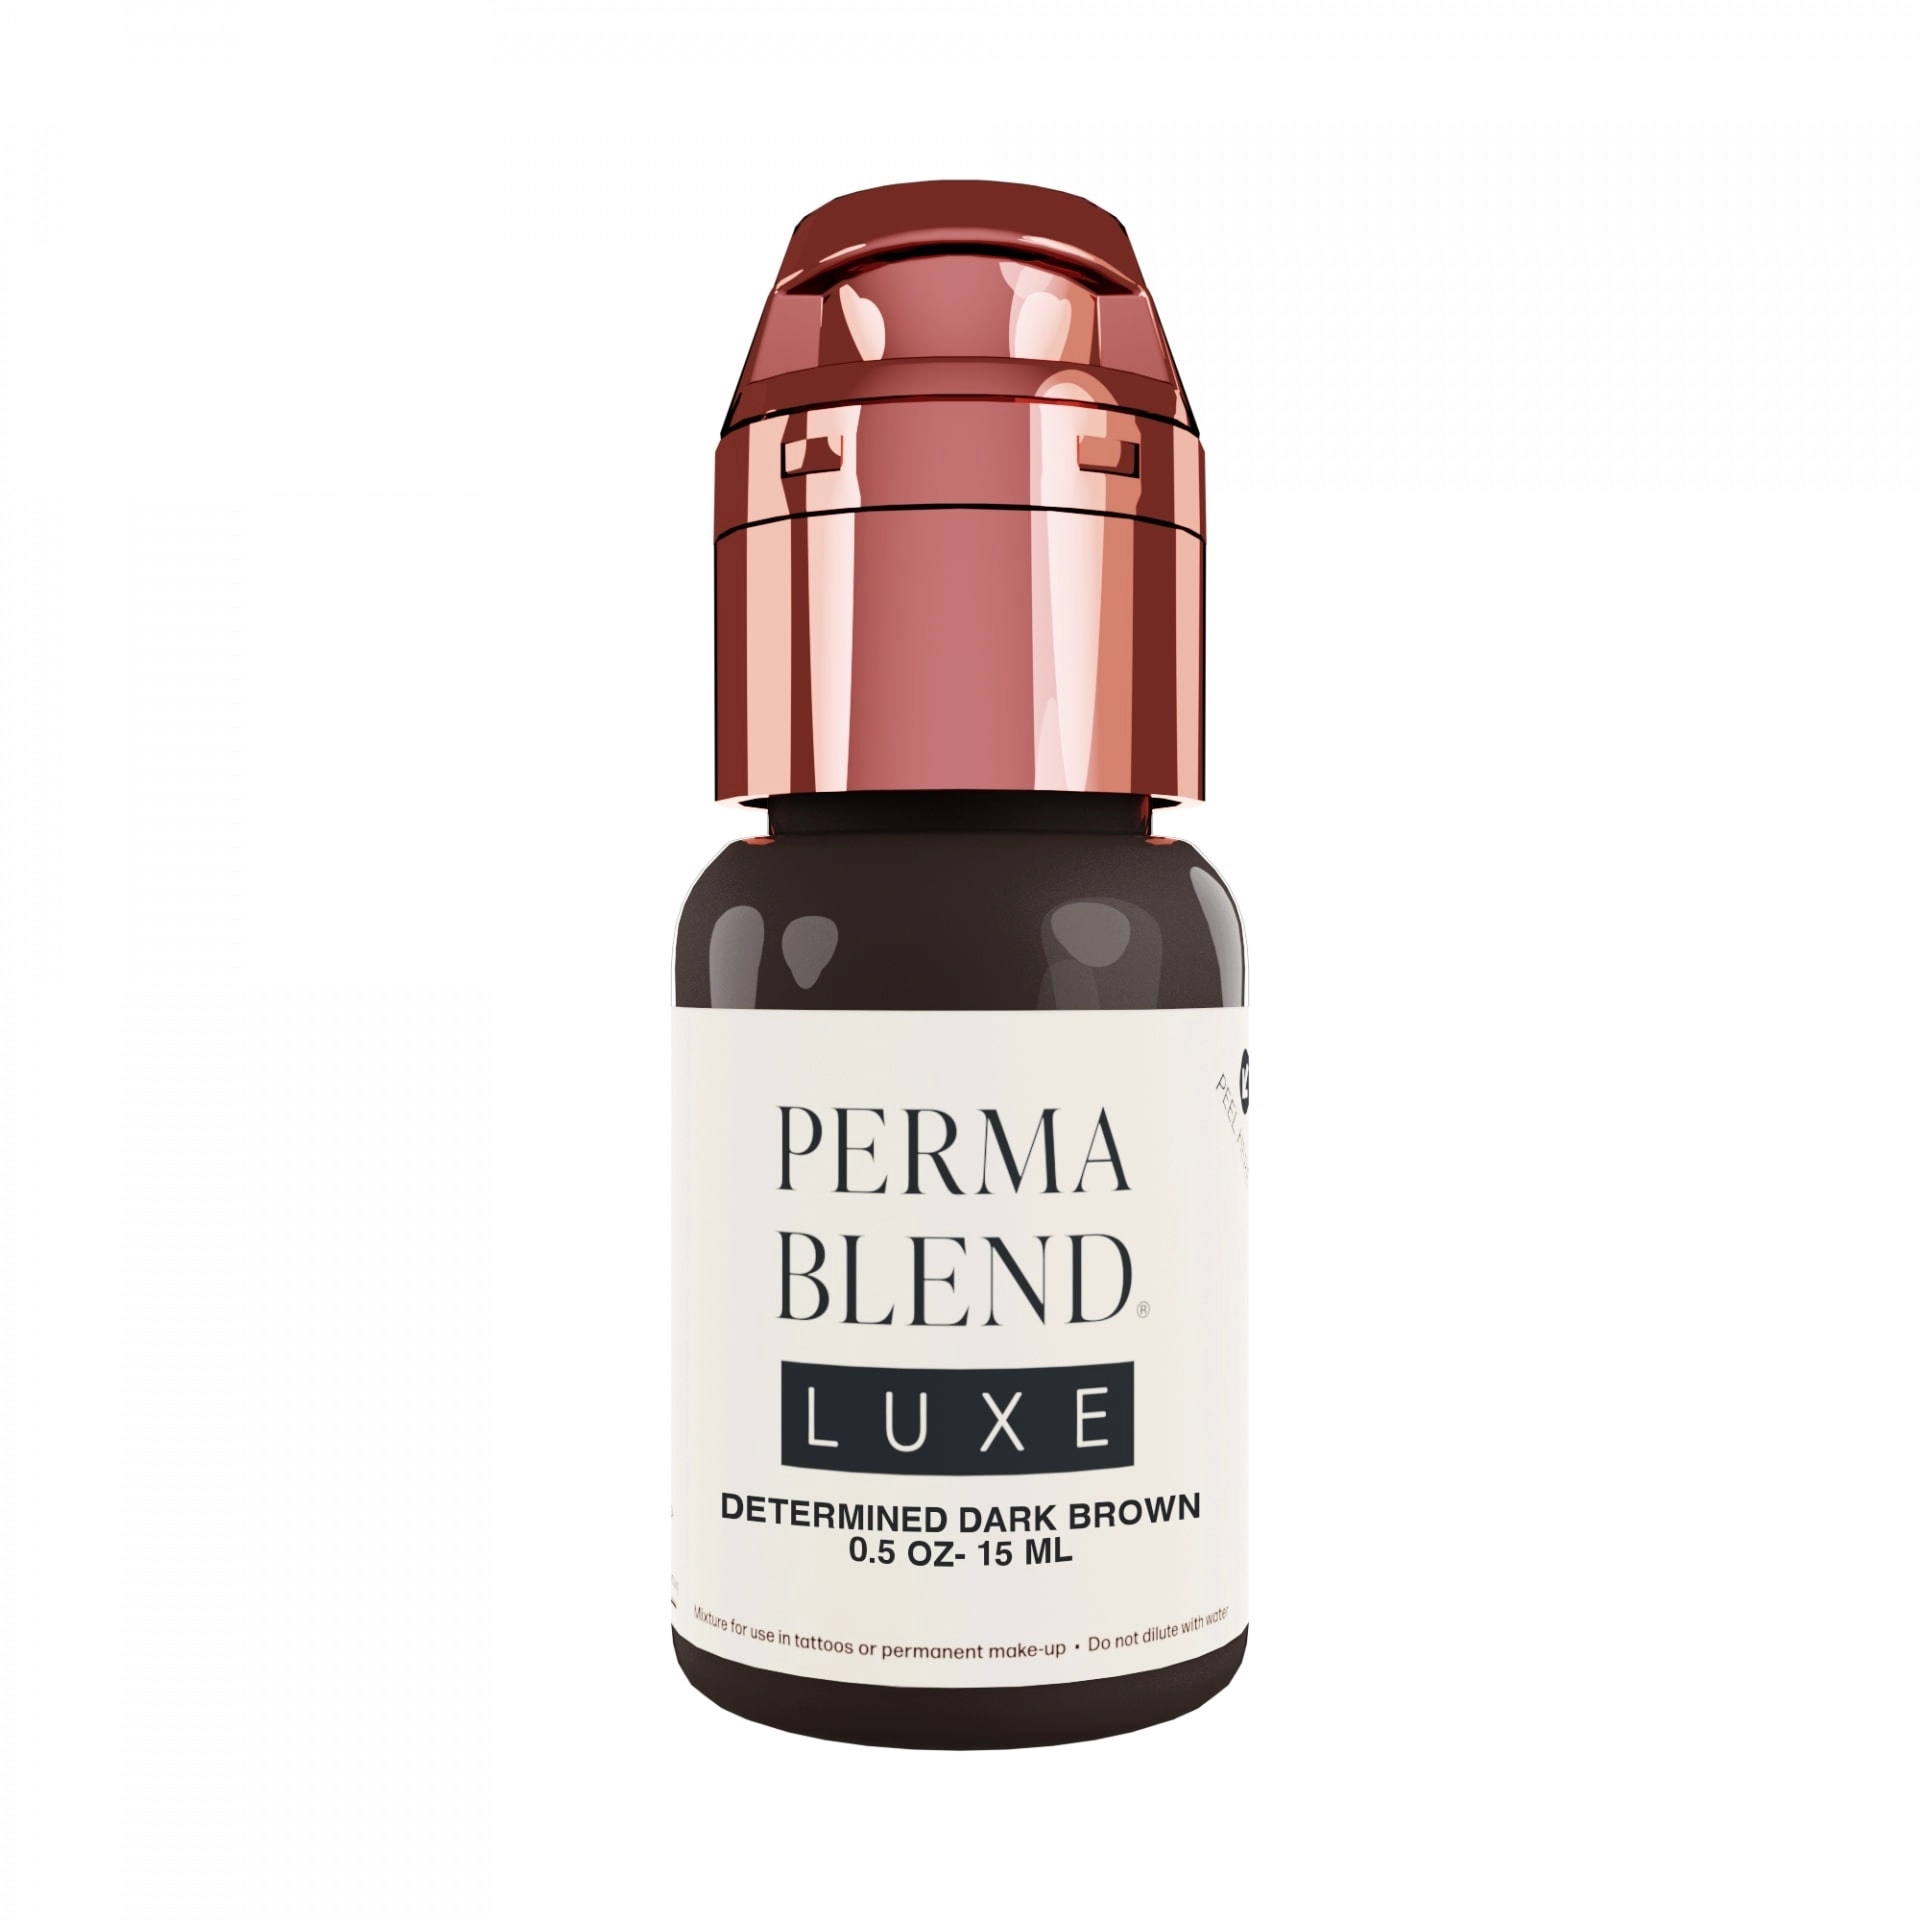 Perma Blend Luxe PMU Pigment - Determined Dark Brown (15 ml)